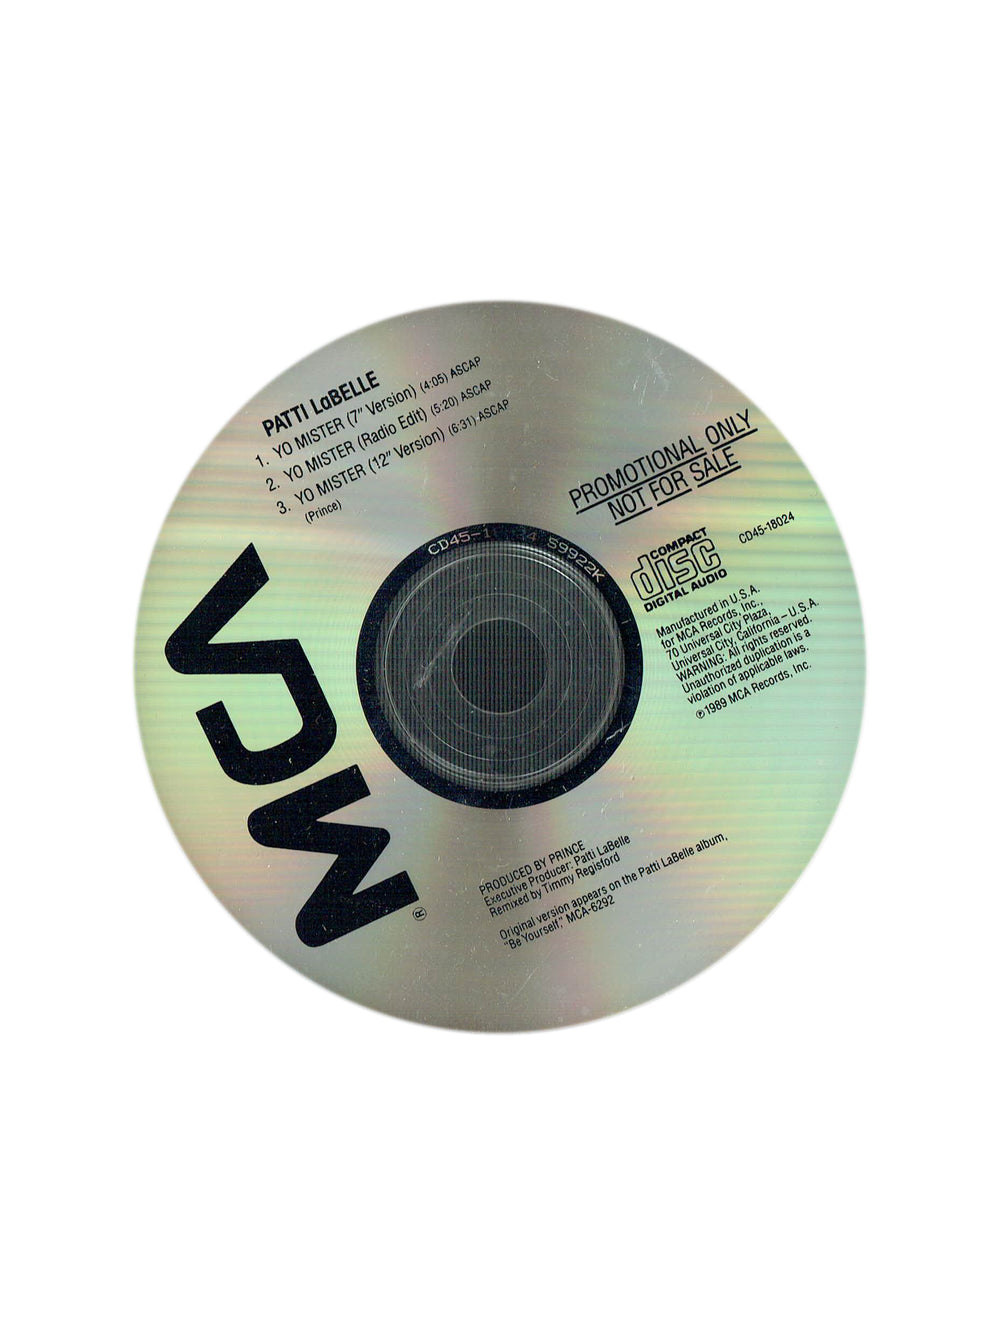 Prince – Patti LaBelle Yo Mister Written & Produced By Prince CD Single Promotional 3 Tracks